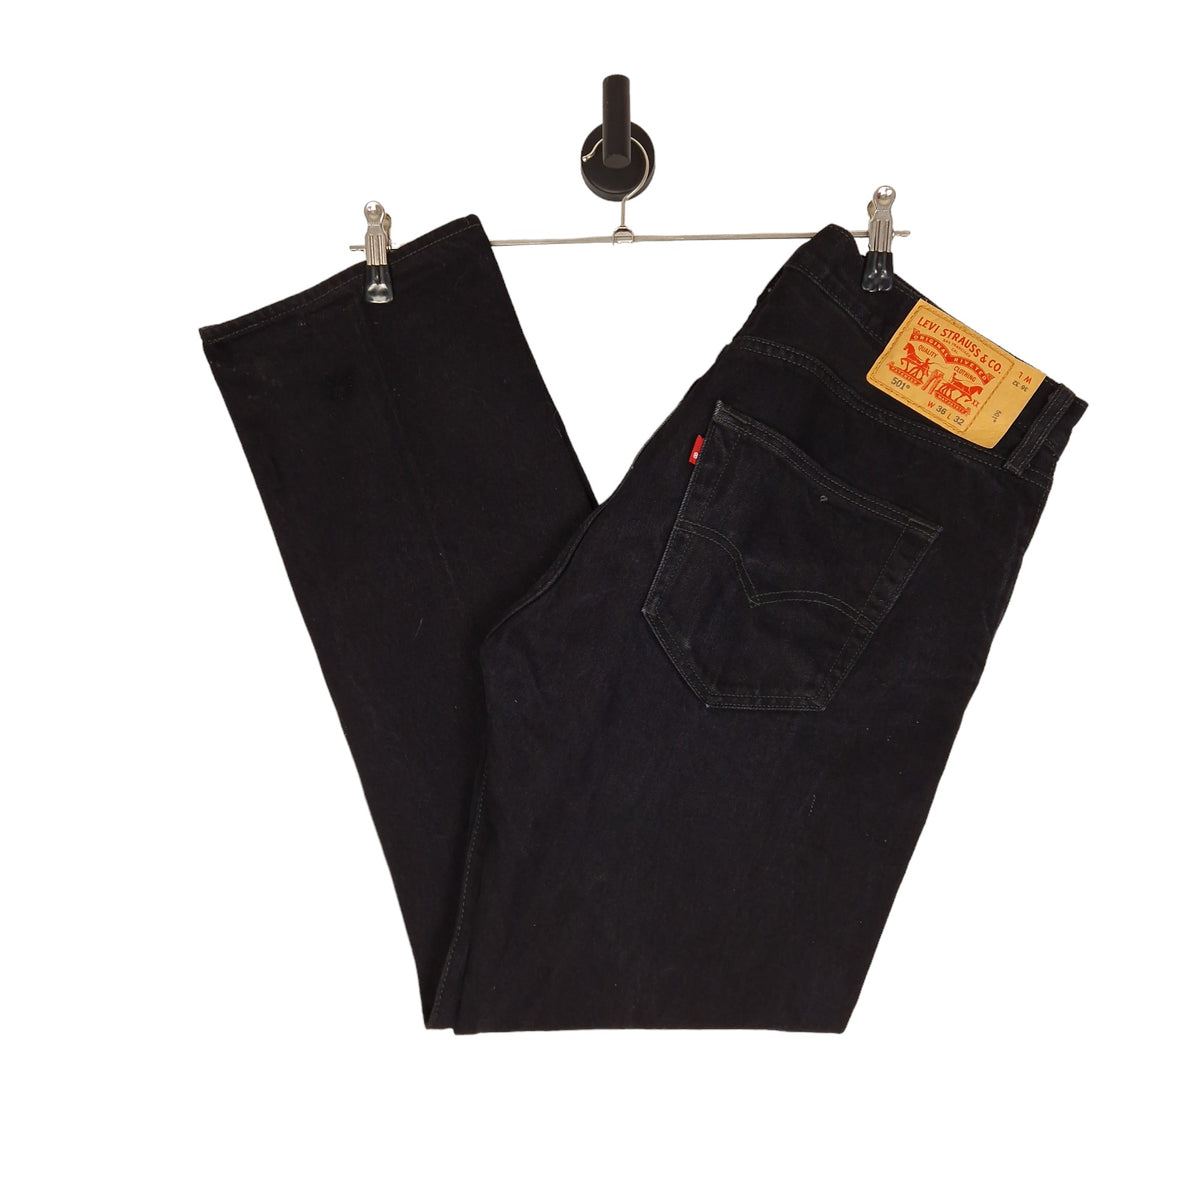 Levi's 501's Denim Jeans - Size W37 L32